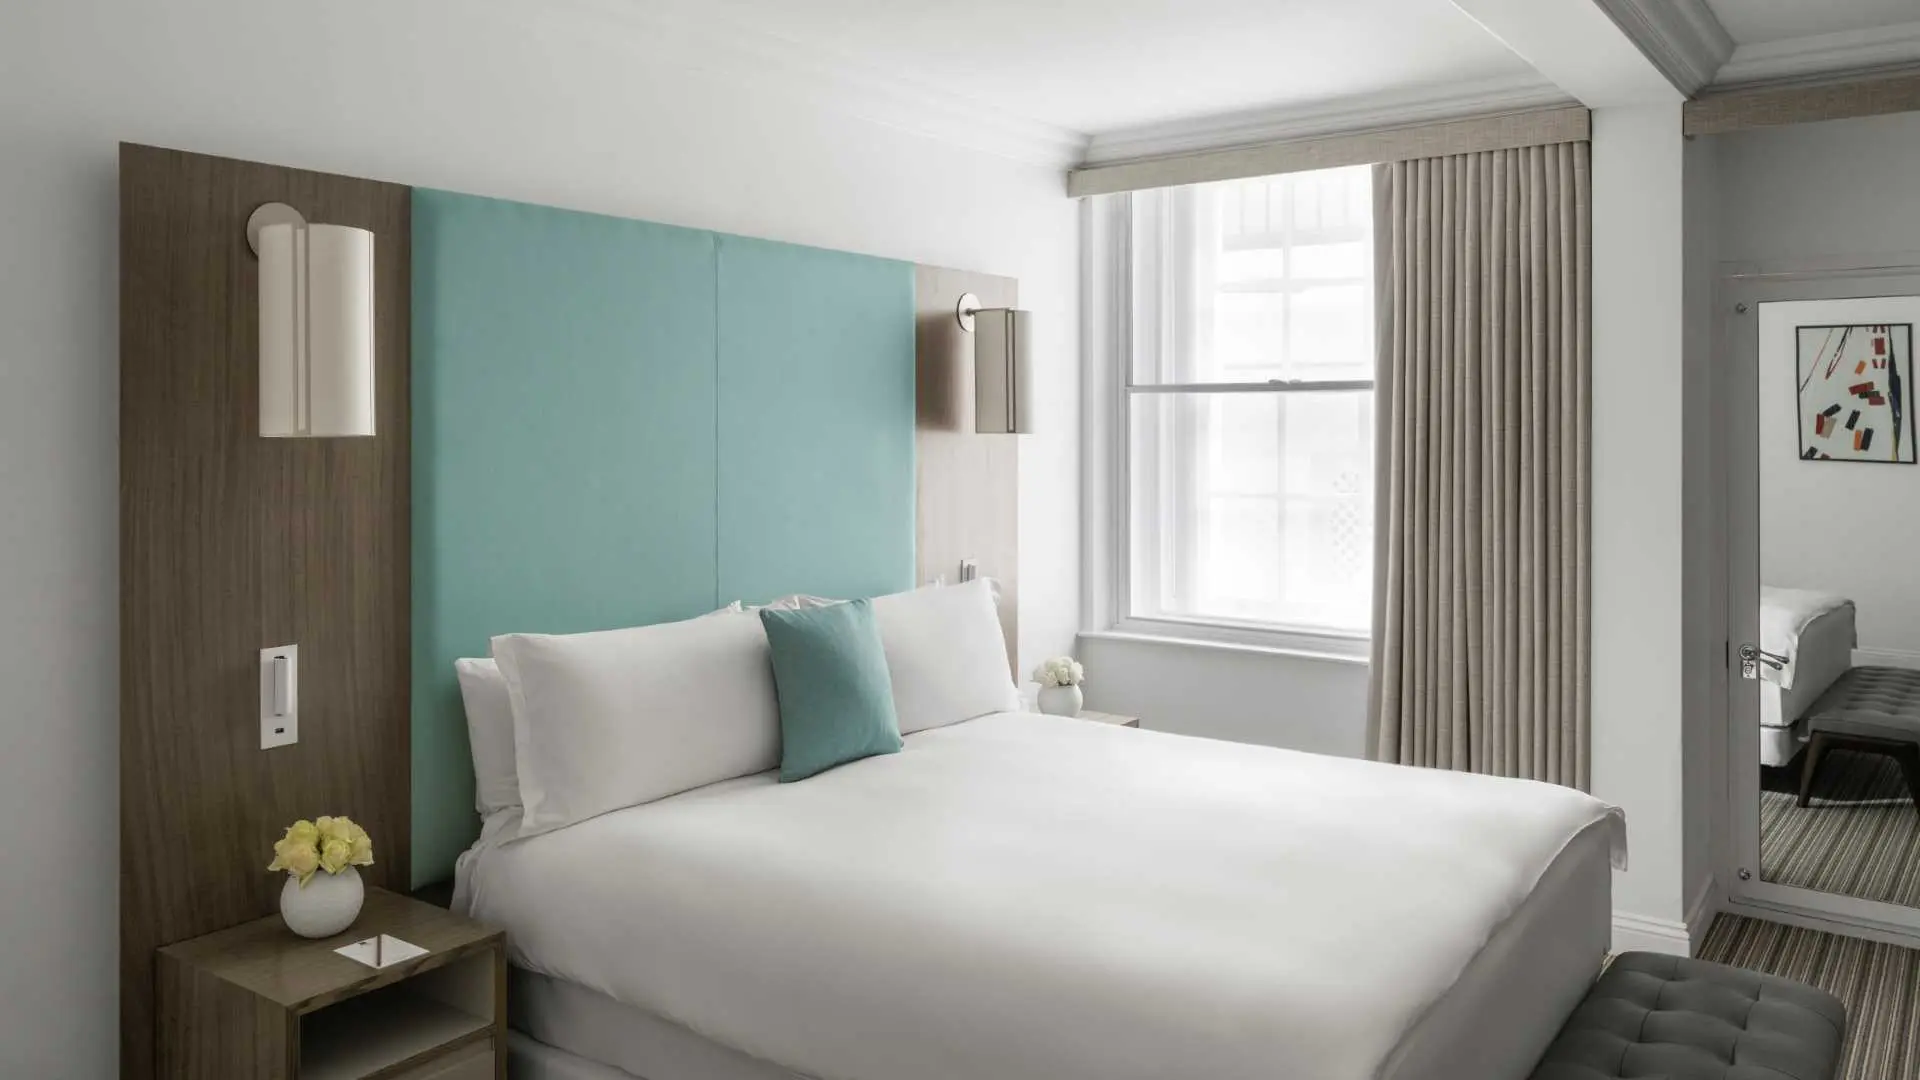 Hotel review Accommodation' - COMO Metropolitan London - 11